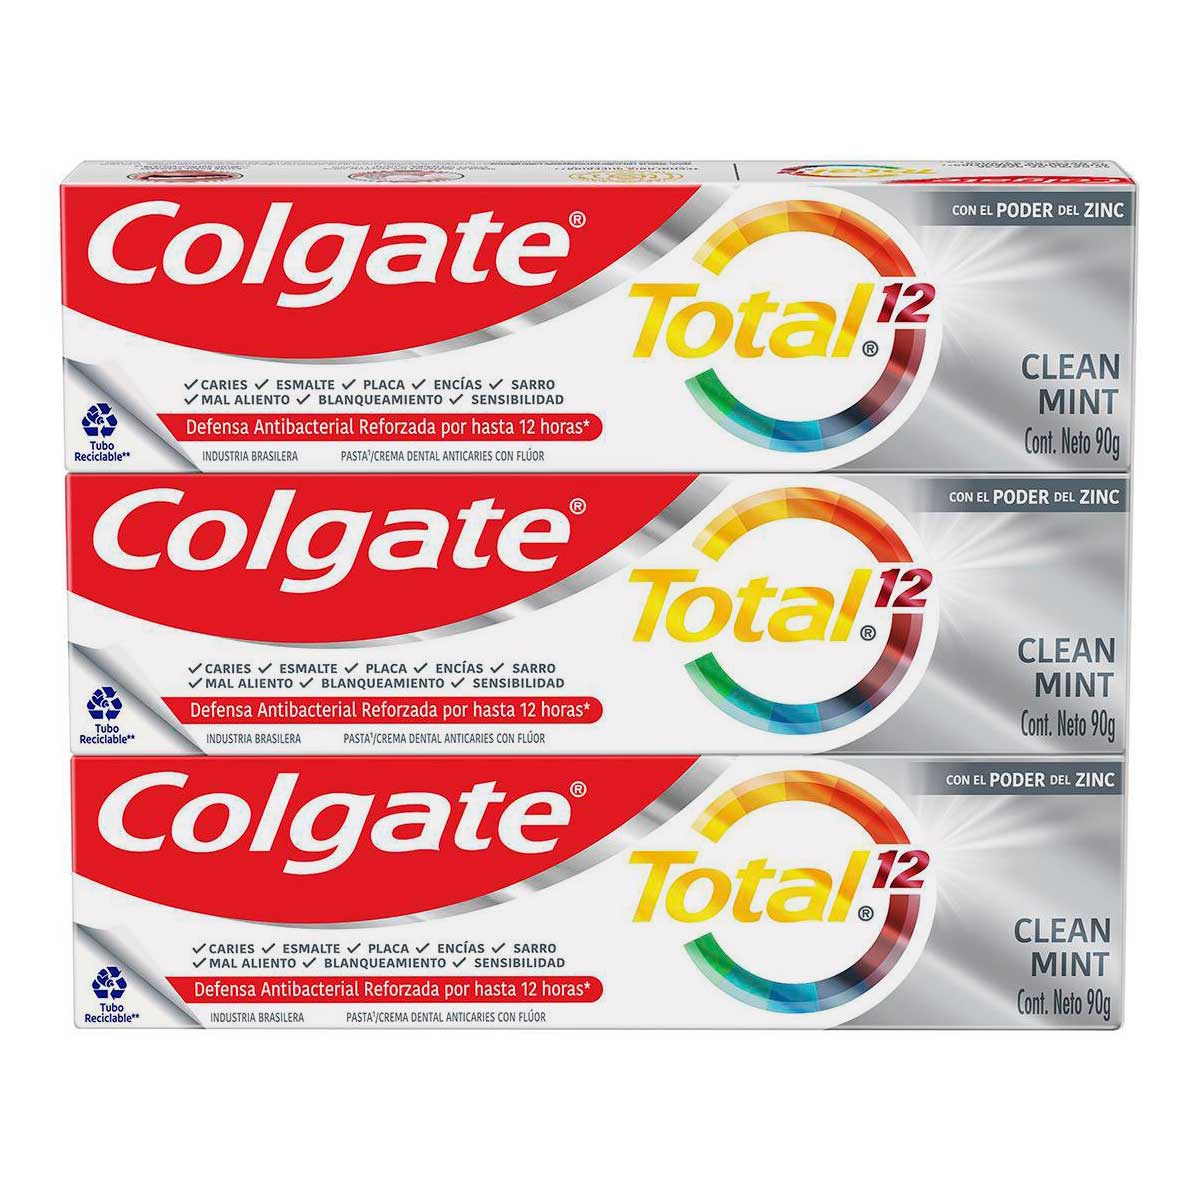 [Regional] Creme Dental Colgate Total 12 Clean Mint 3 Unidades - 90g